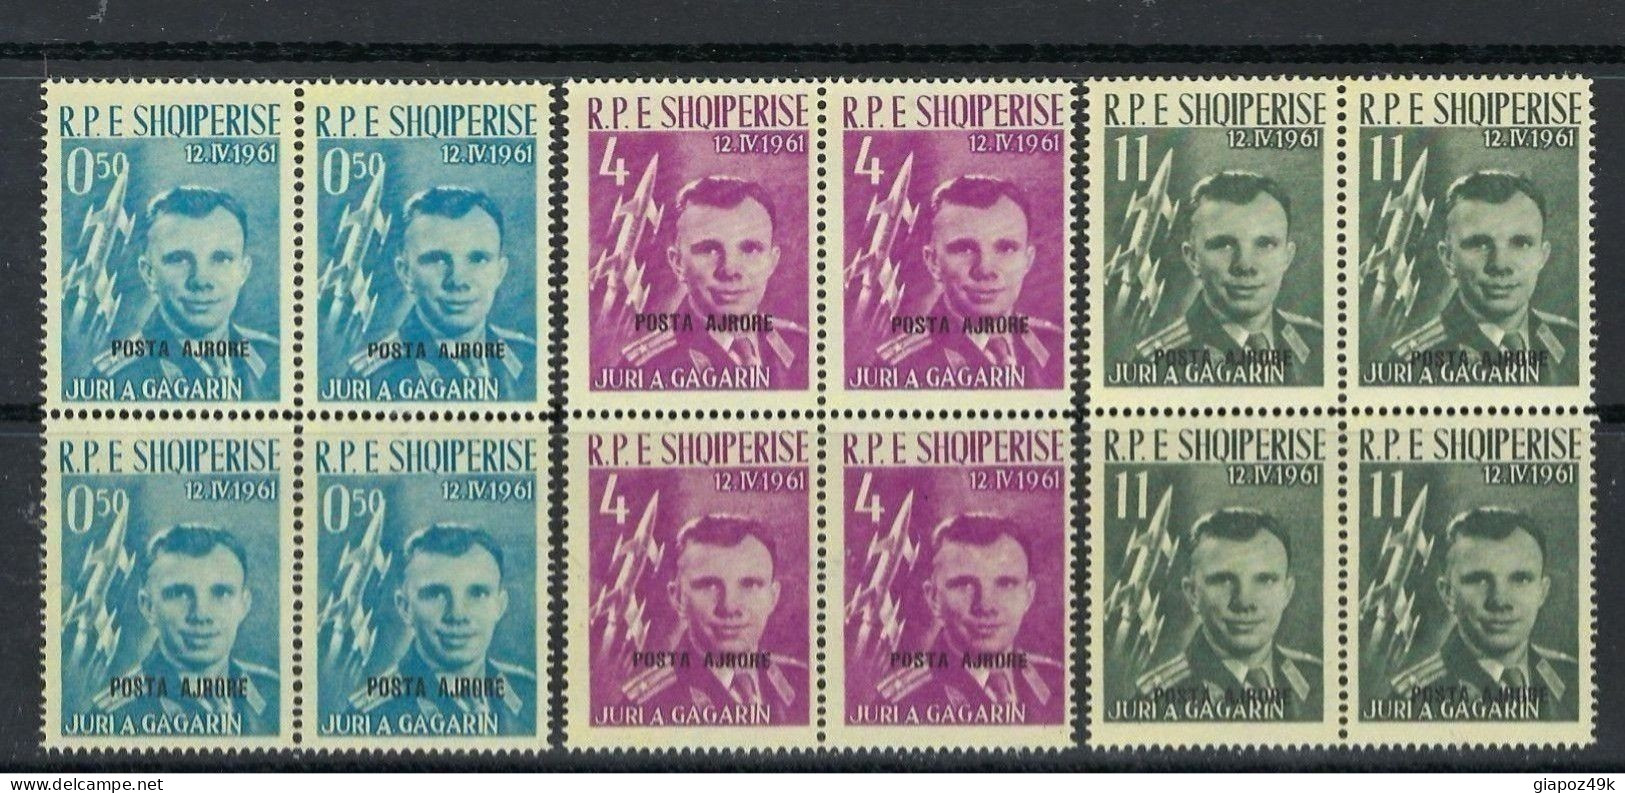 ● ALBANIA 1962 ֍ Wostock 1 ֍ J. Gagarin ● Soprastampati NERO ● P. A. N. A62B / 64B ** X 4 ● Cat. 1200 € ● Lotto N. 330 ● - Albanien